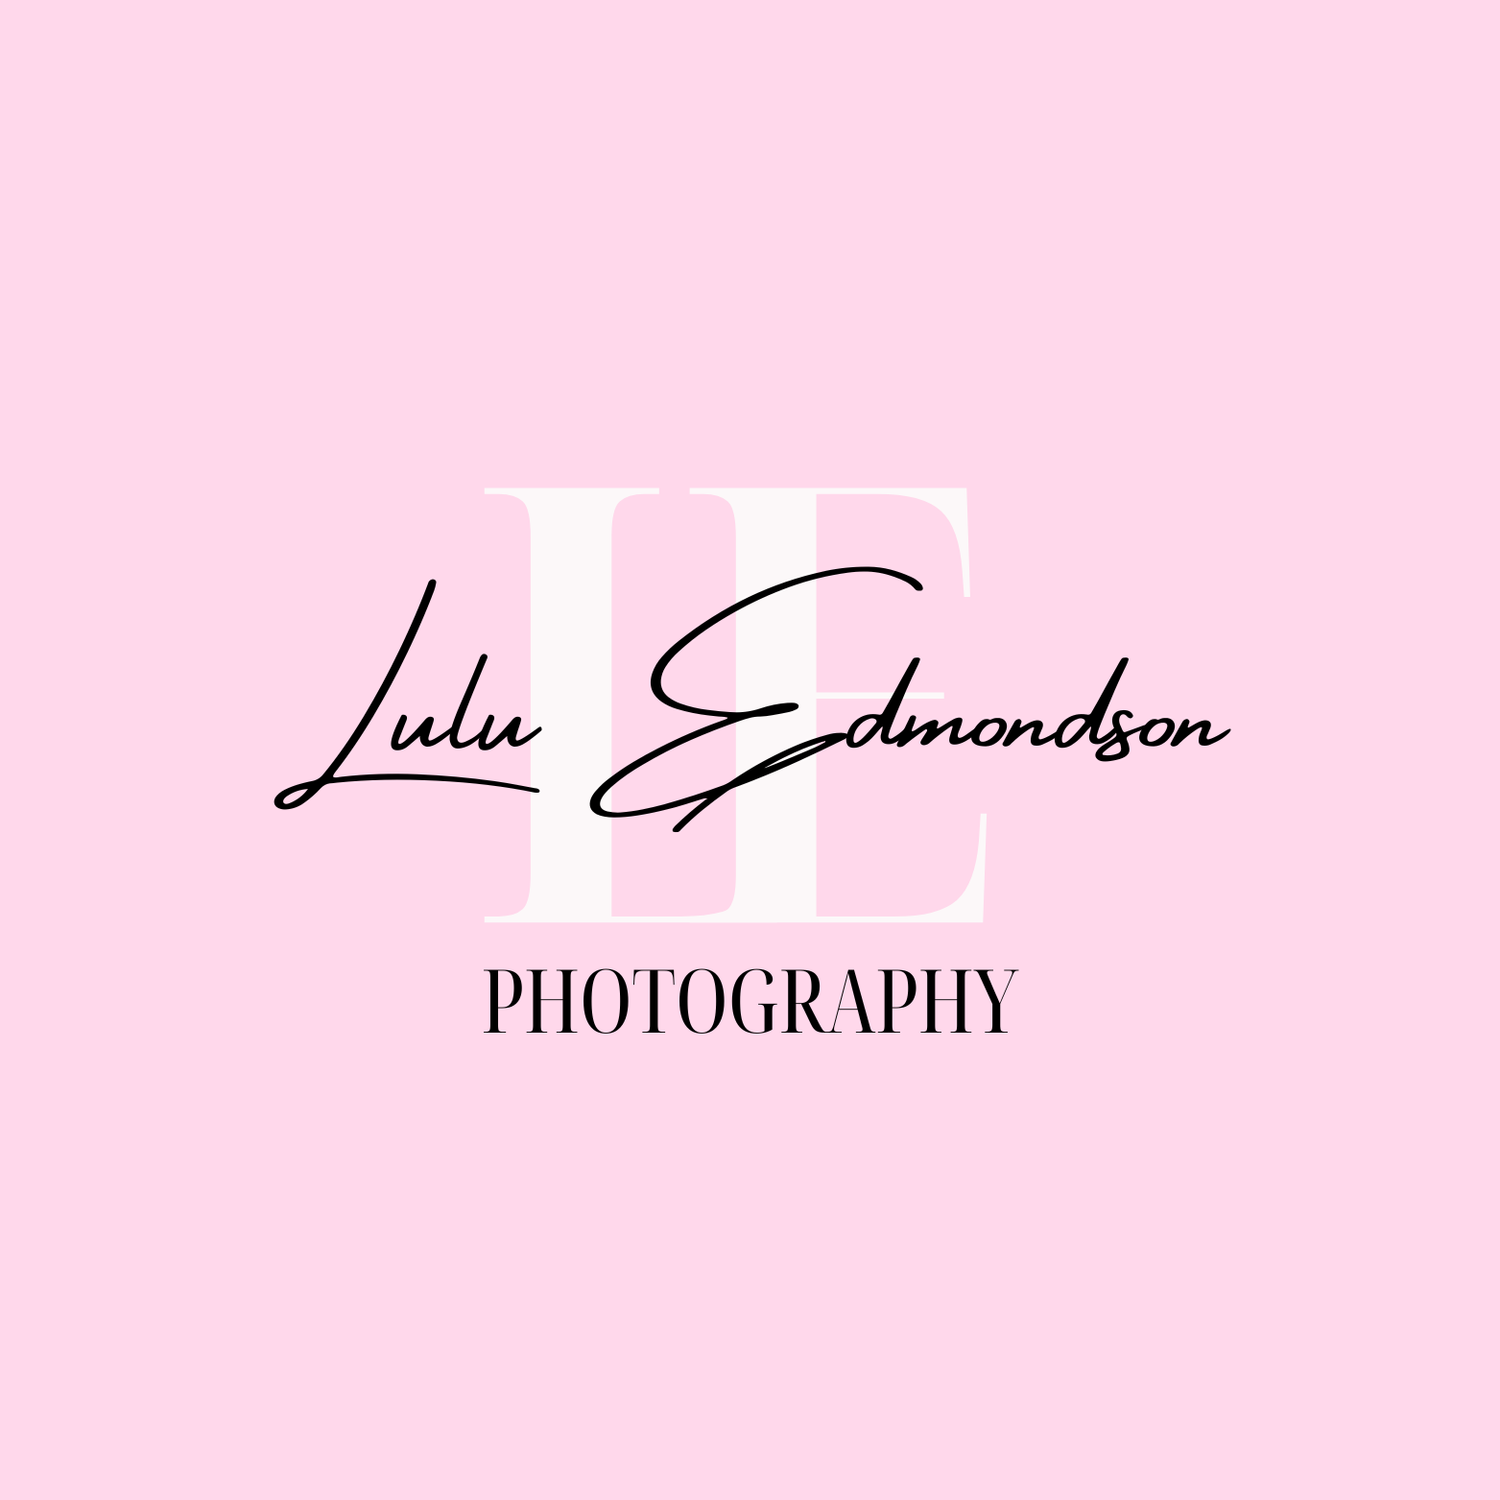 Lulu Edmondson Photography